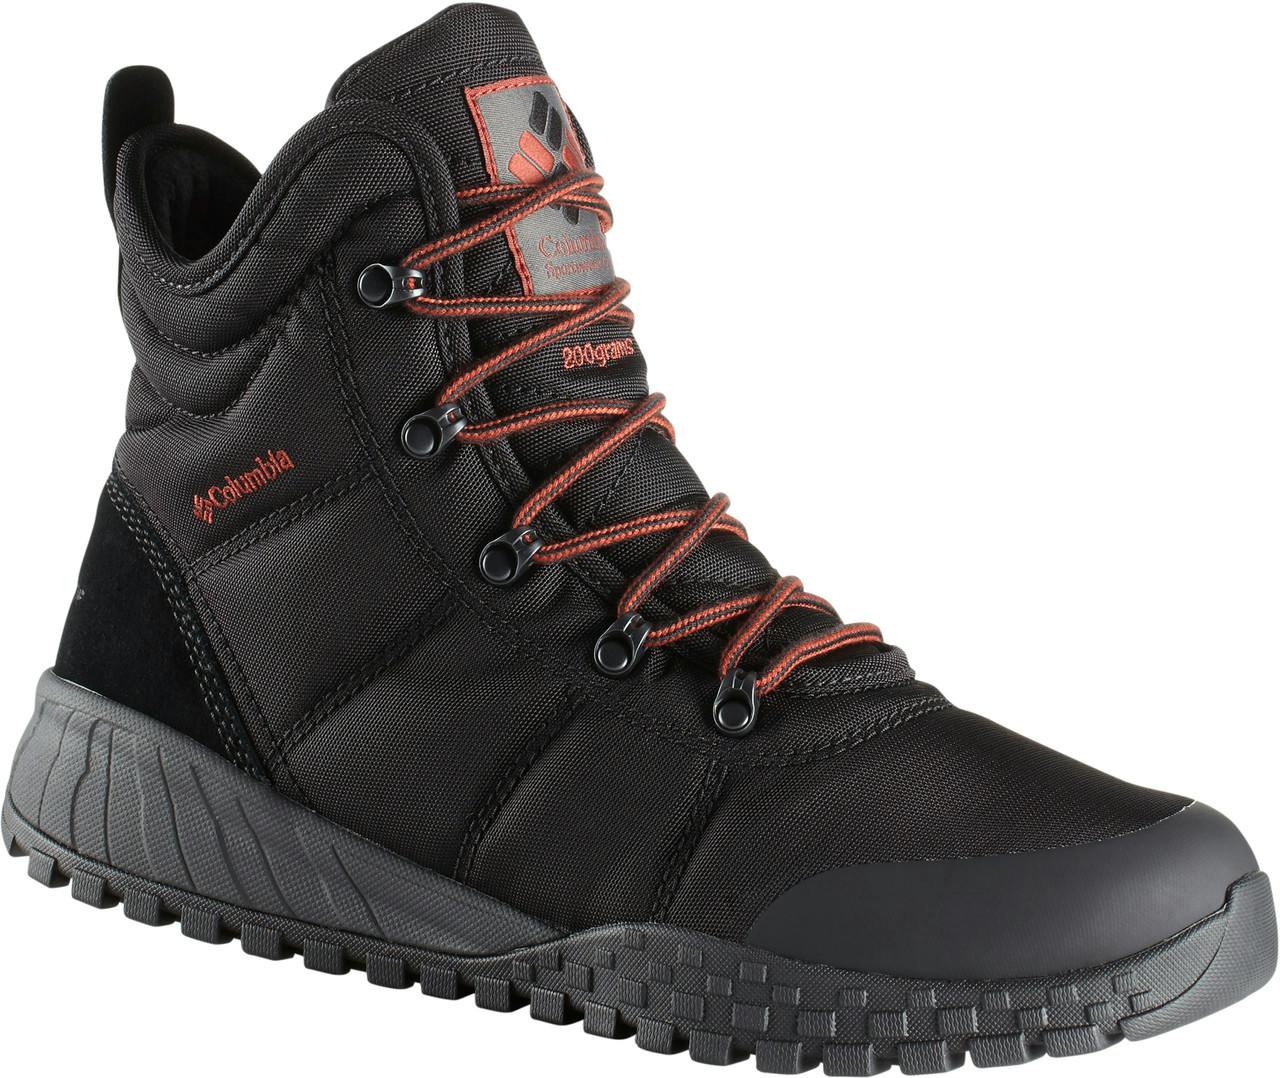 Fairbanks Omni-Heat Winter Boots Black/Rusty